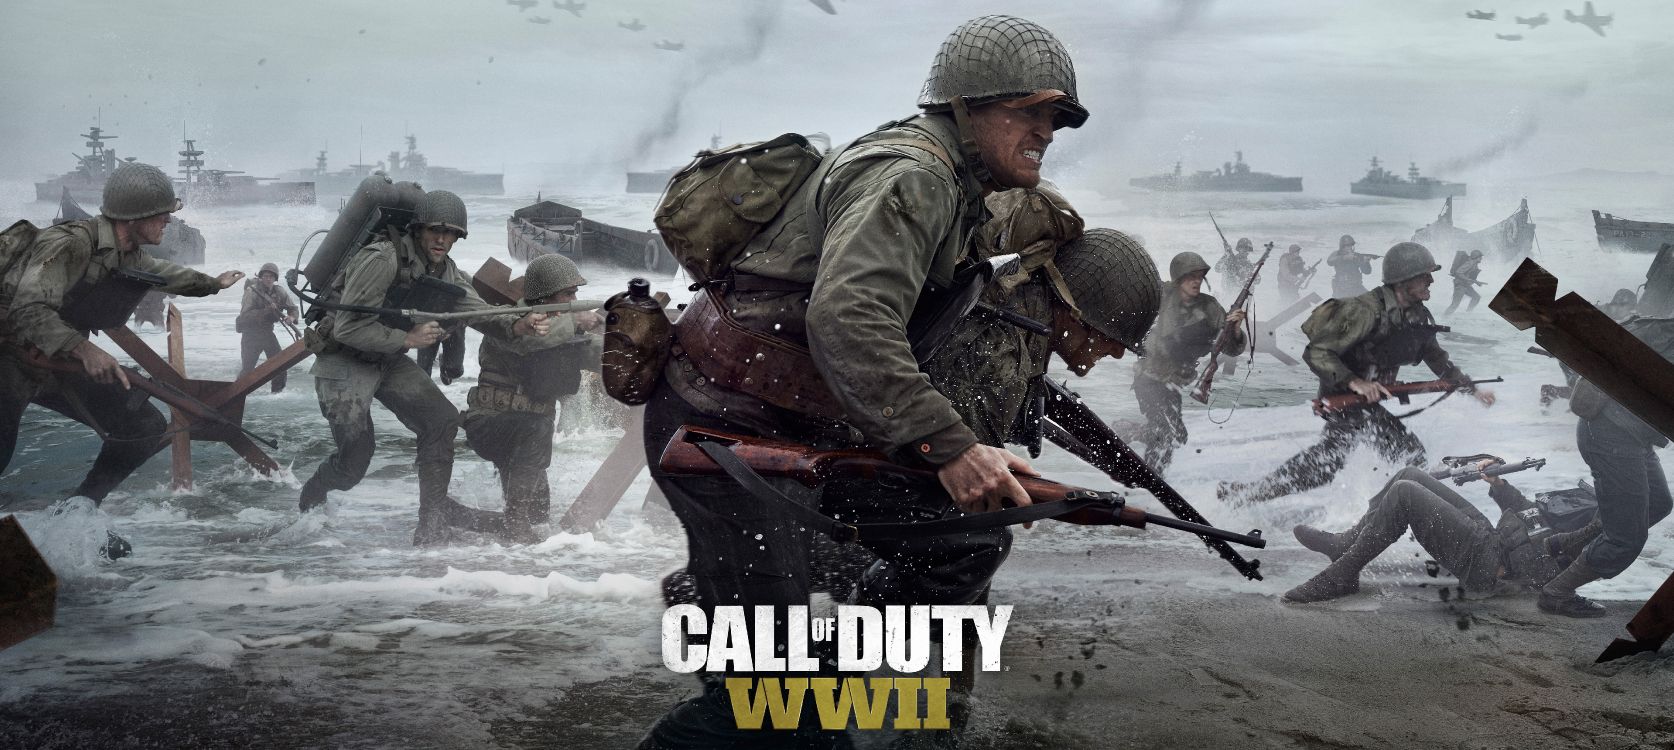 Call of Duty Ww2, Call of Duty de la Seconde GUERRE Mondiale, Call of Duty, Call of Duty World at War, Activision. Wallpaper in 7190x3220 Resolution